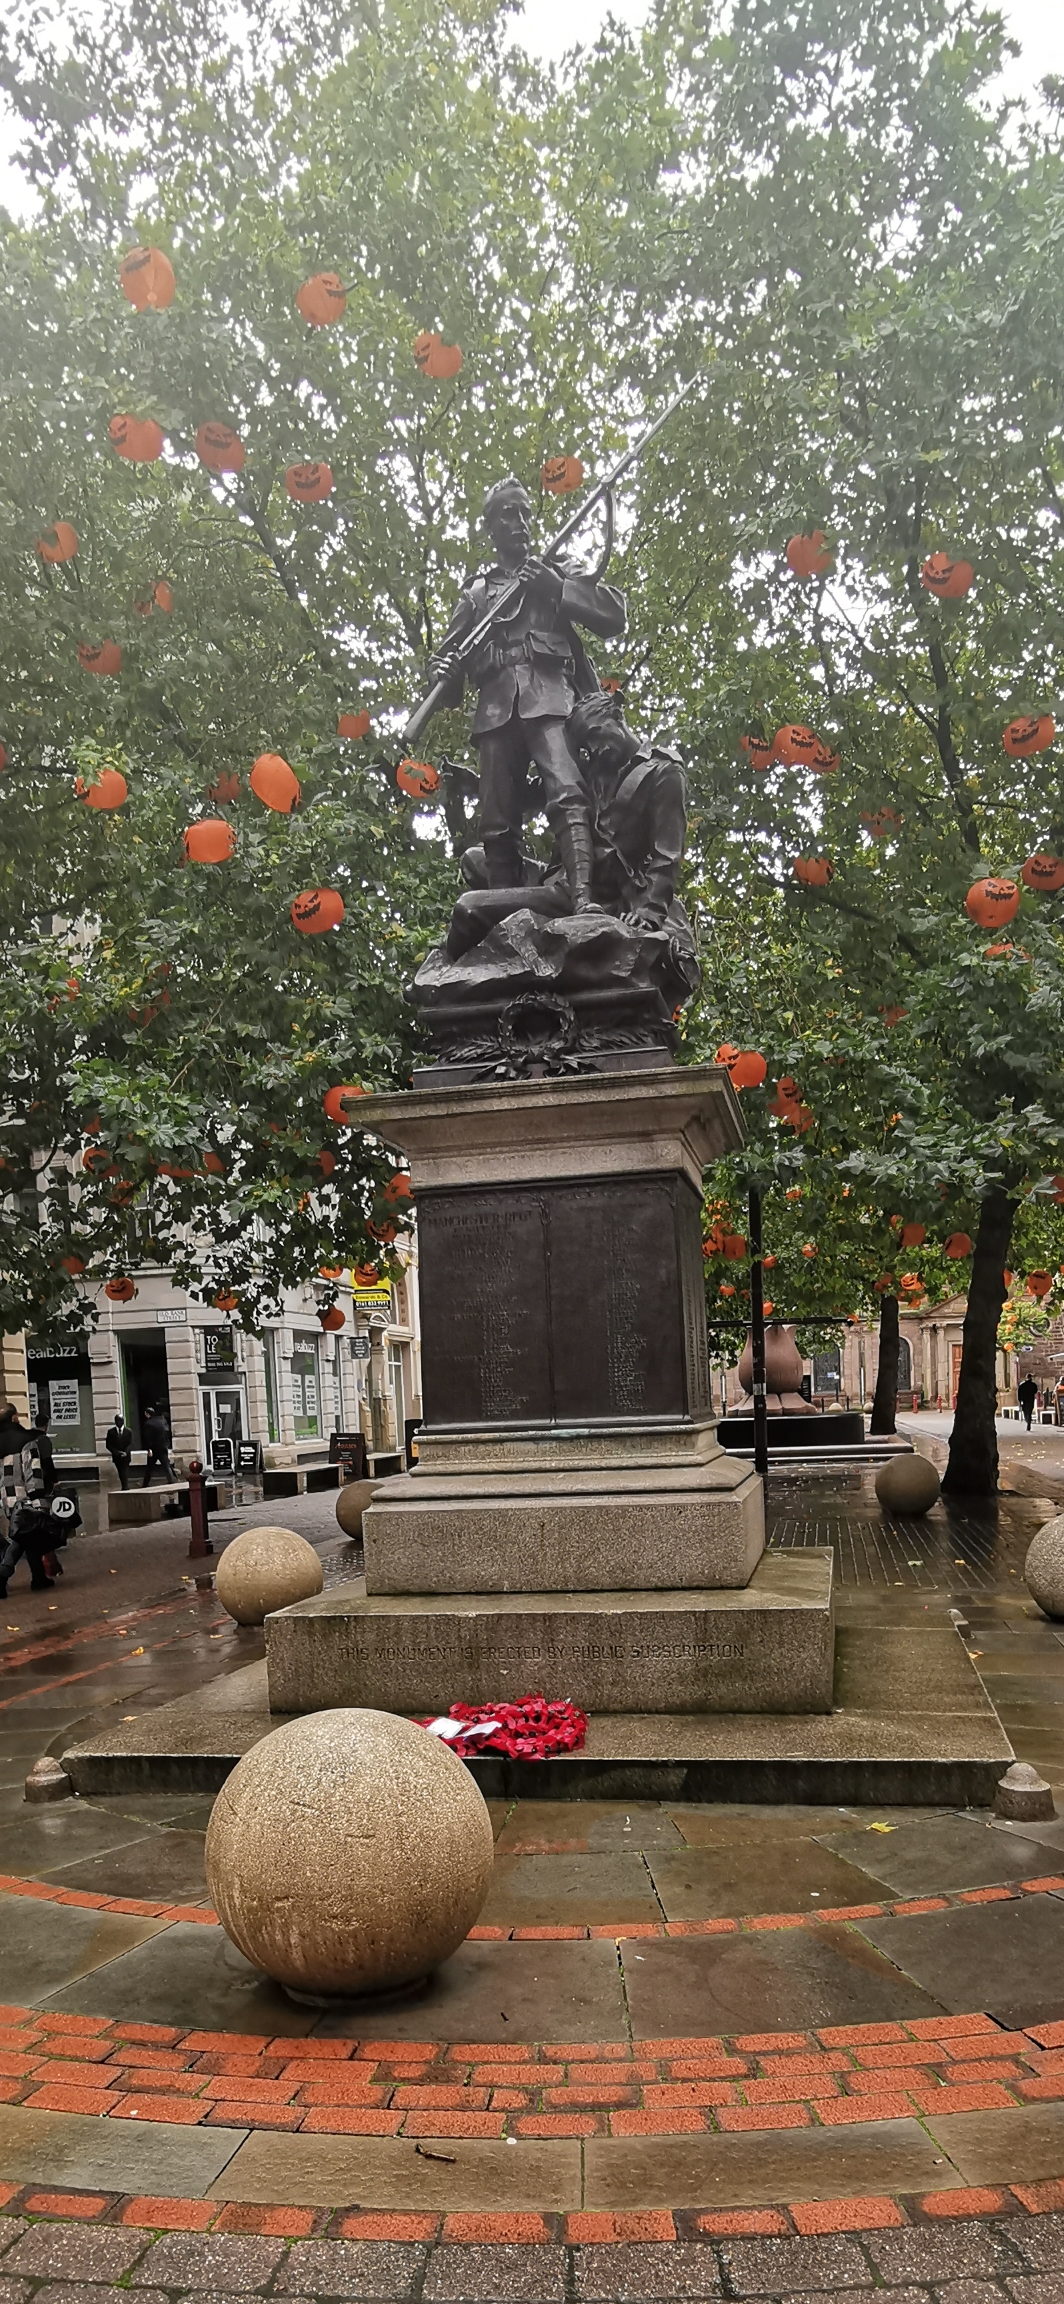 Photo taken between Shambles Square and Royal Exchange